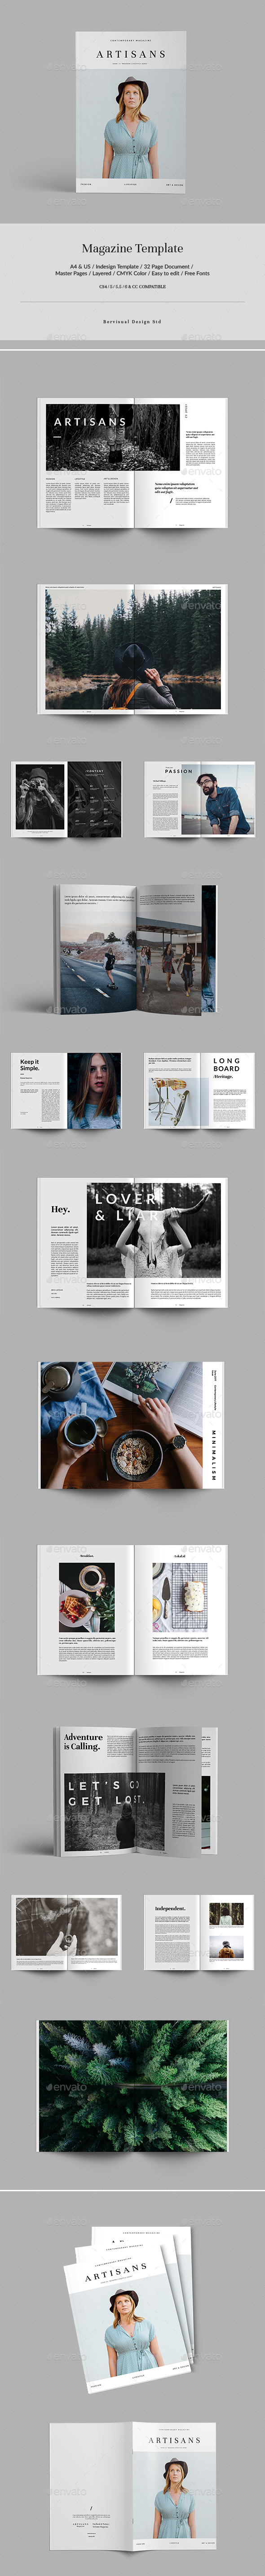 magazine layout templates free